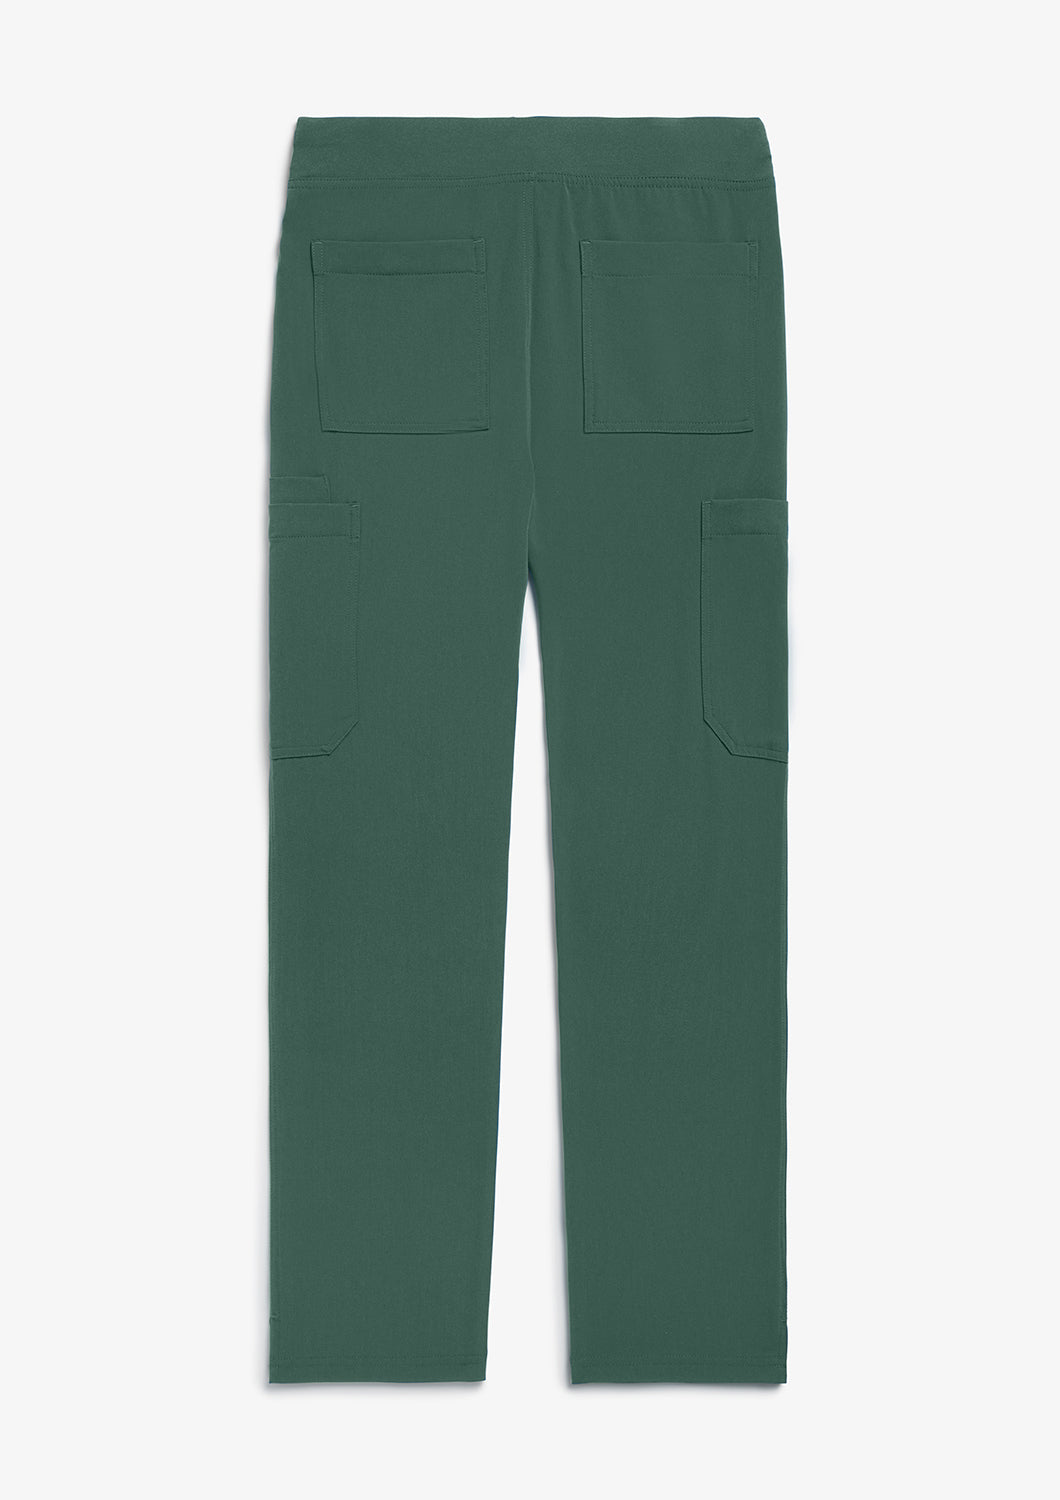 Union Pants - Hunter Green